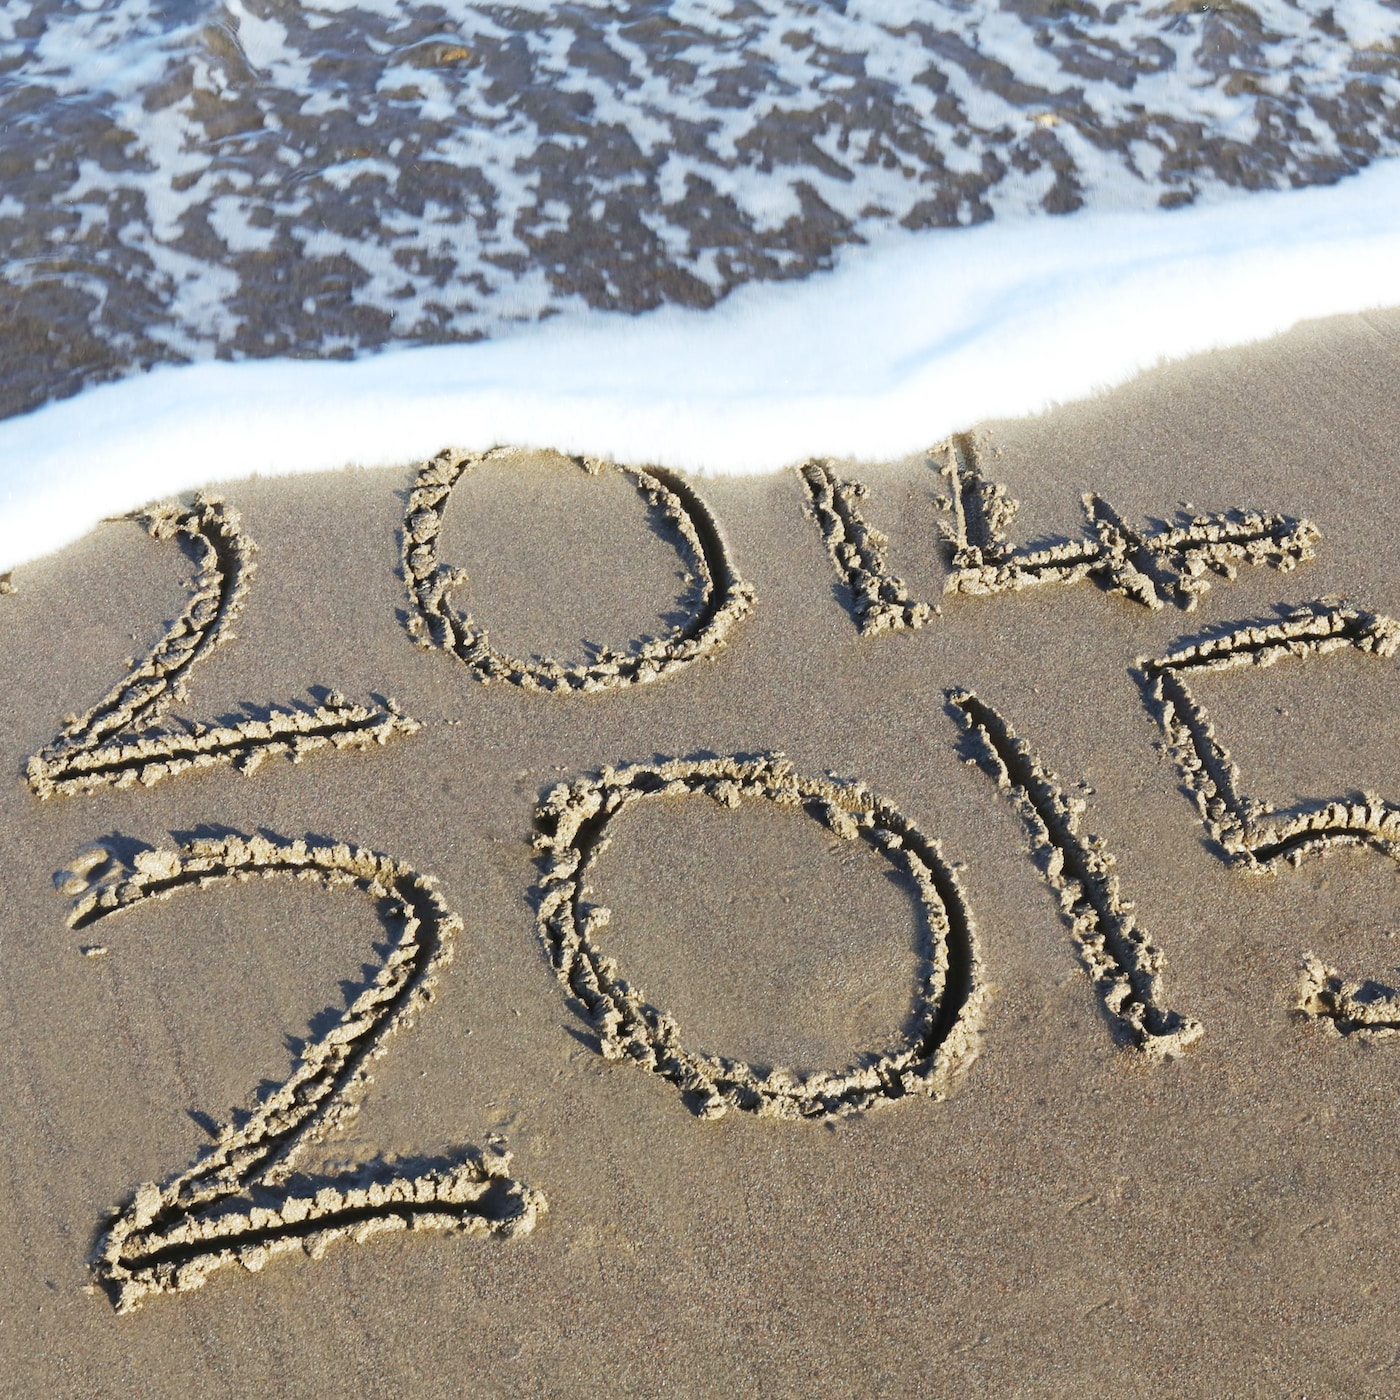 20 Fabulous Beaches for 2013 ...